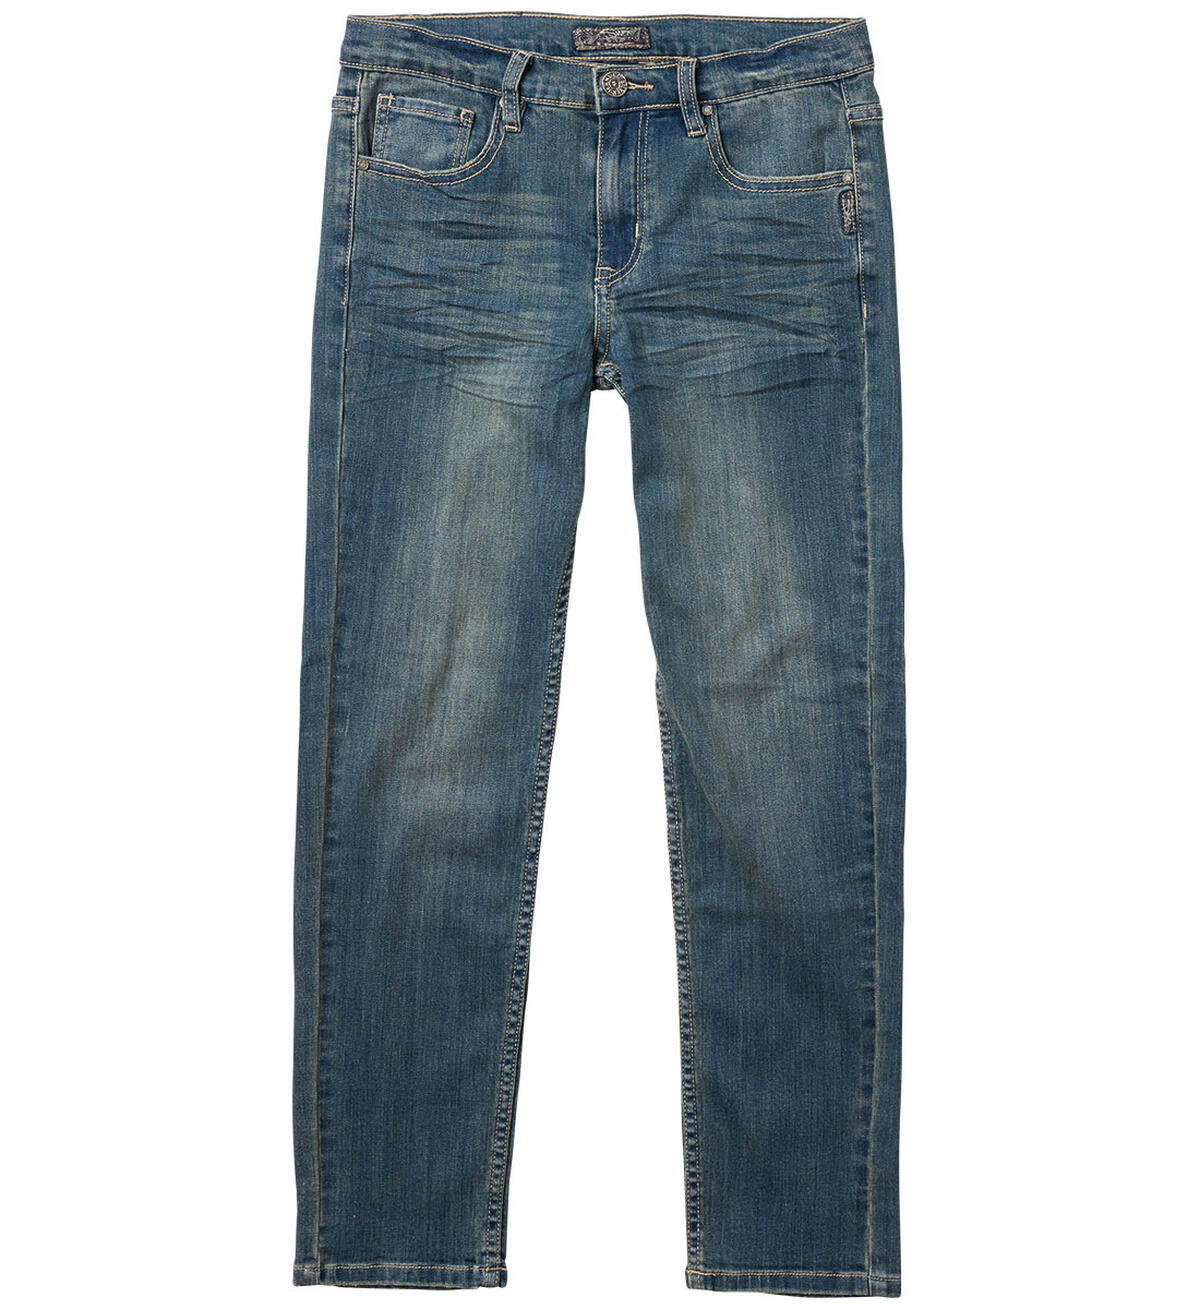 Nathan Skinny Jeans in Medium Wash (4-7), , hi-res image number 0